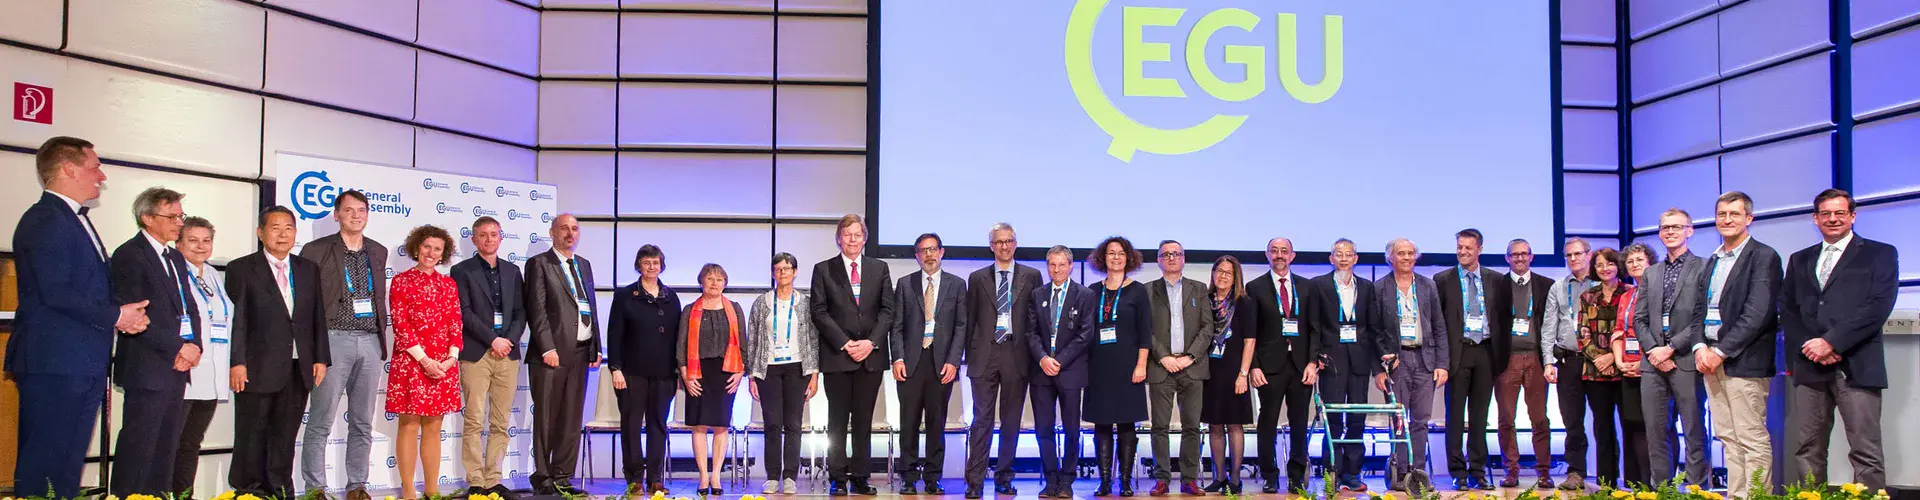 EGU General Assembly 2019 Awards Ceremony (Credit: EGU/Foto Pfluegl)